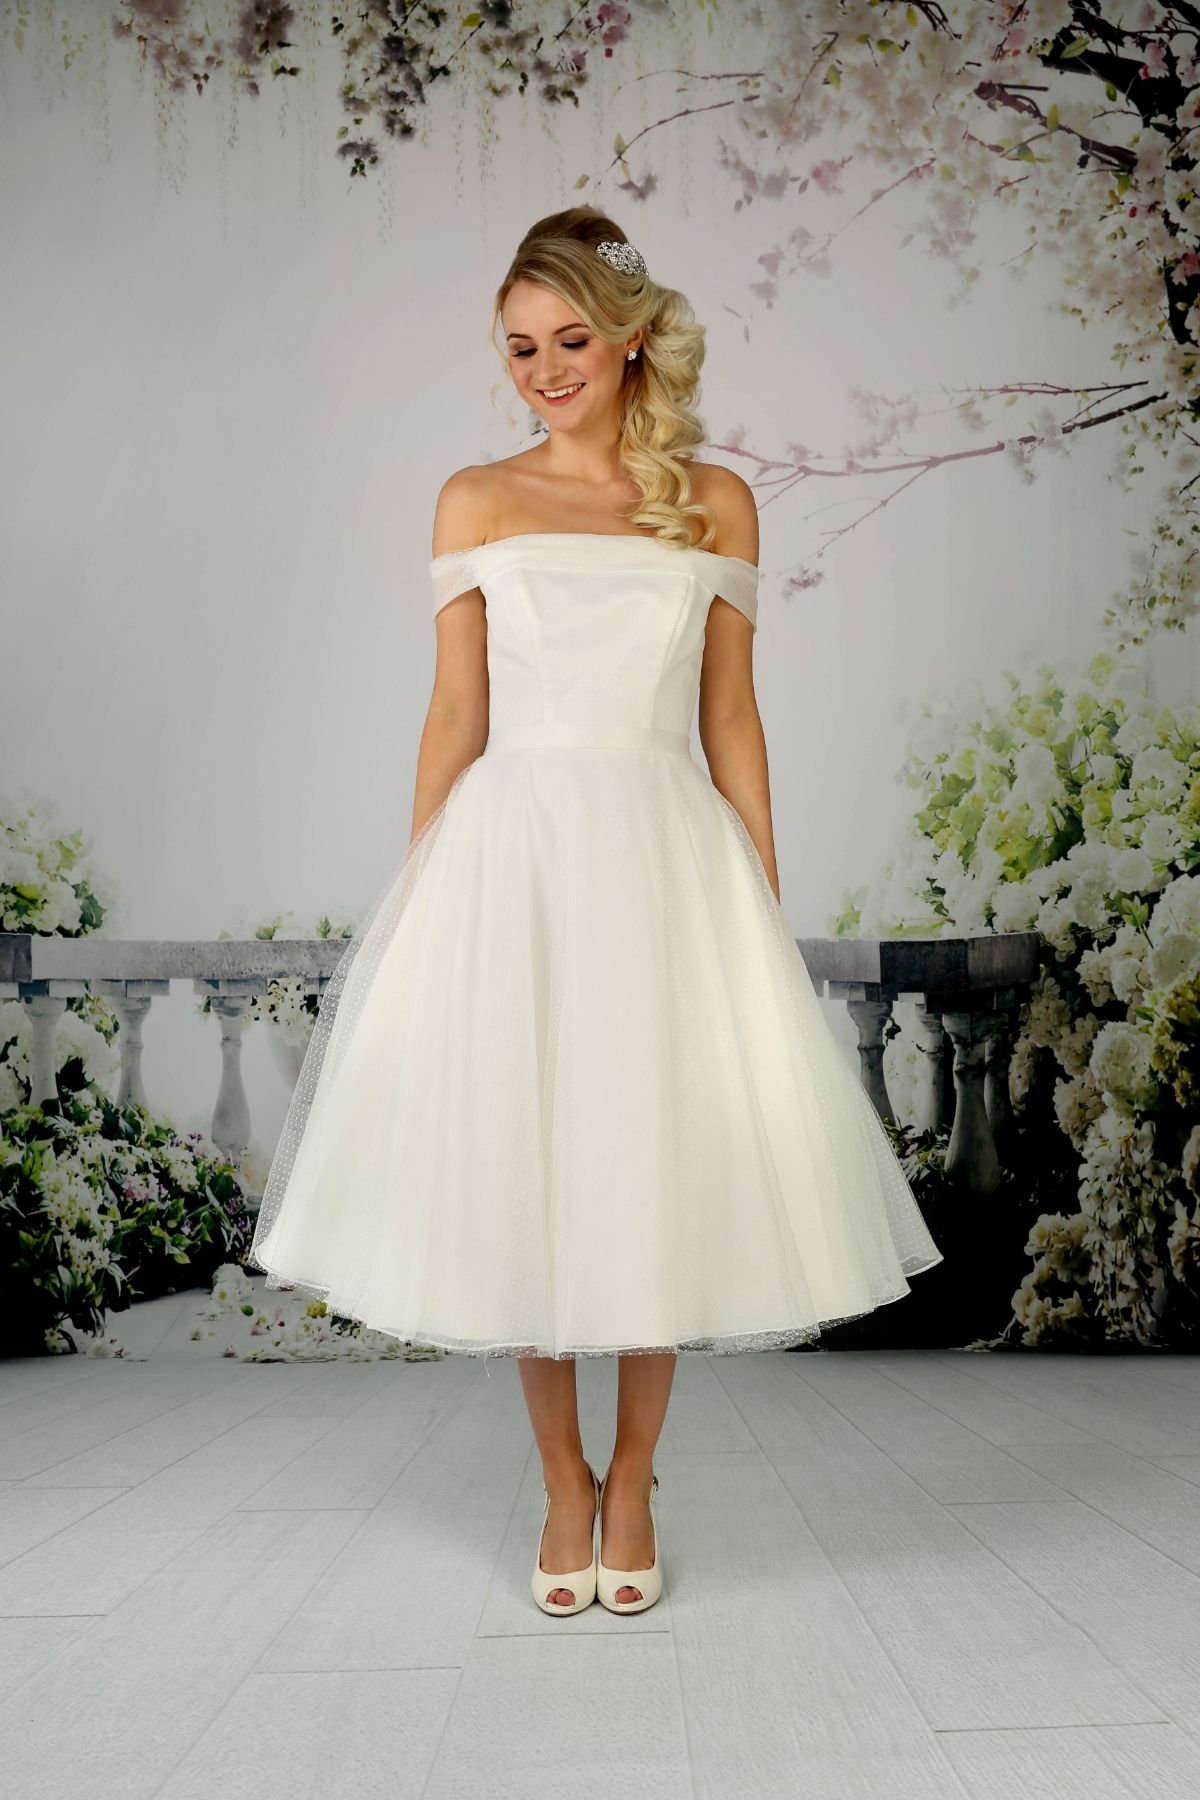 Best Dress 2 Impress Bridal-Image-5